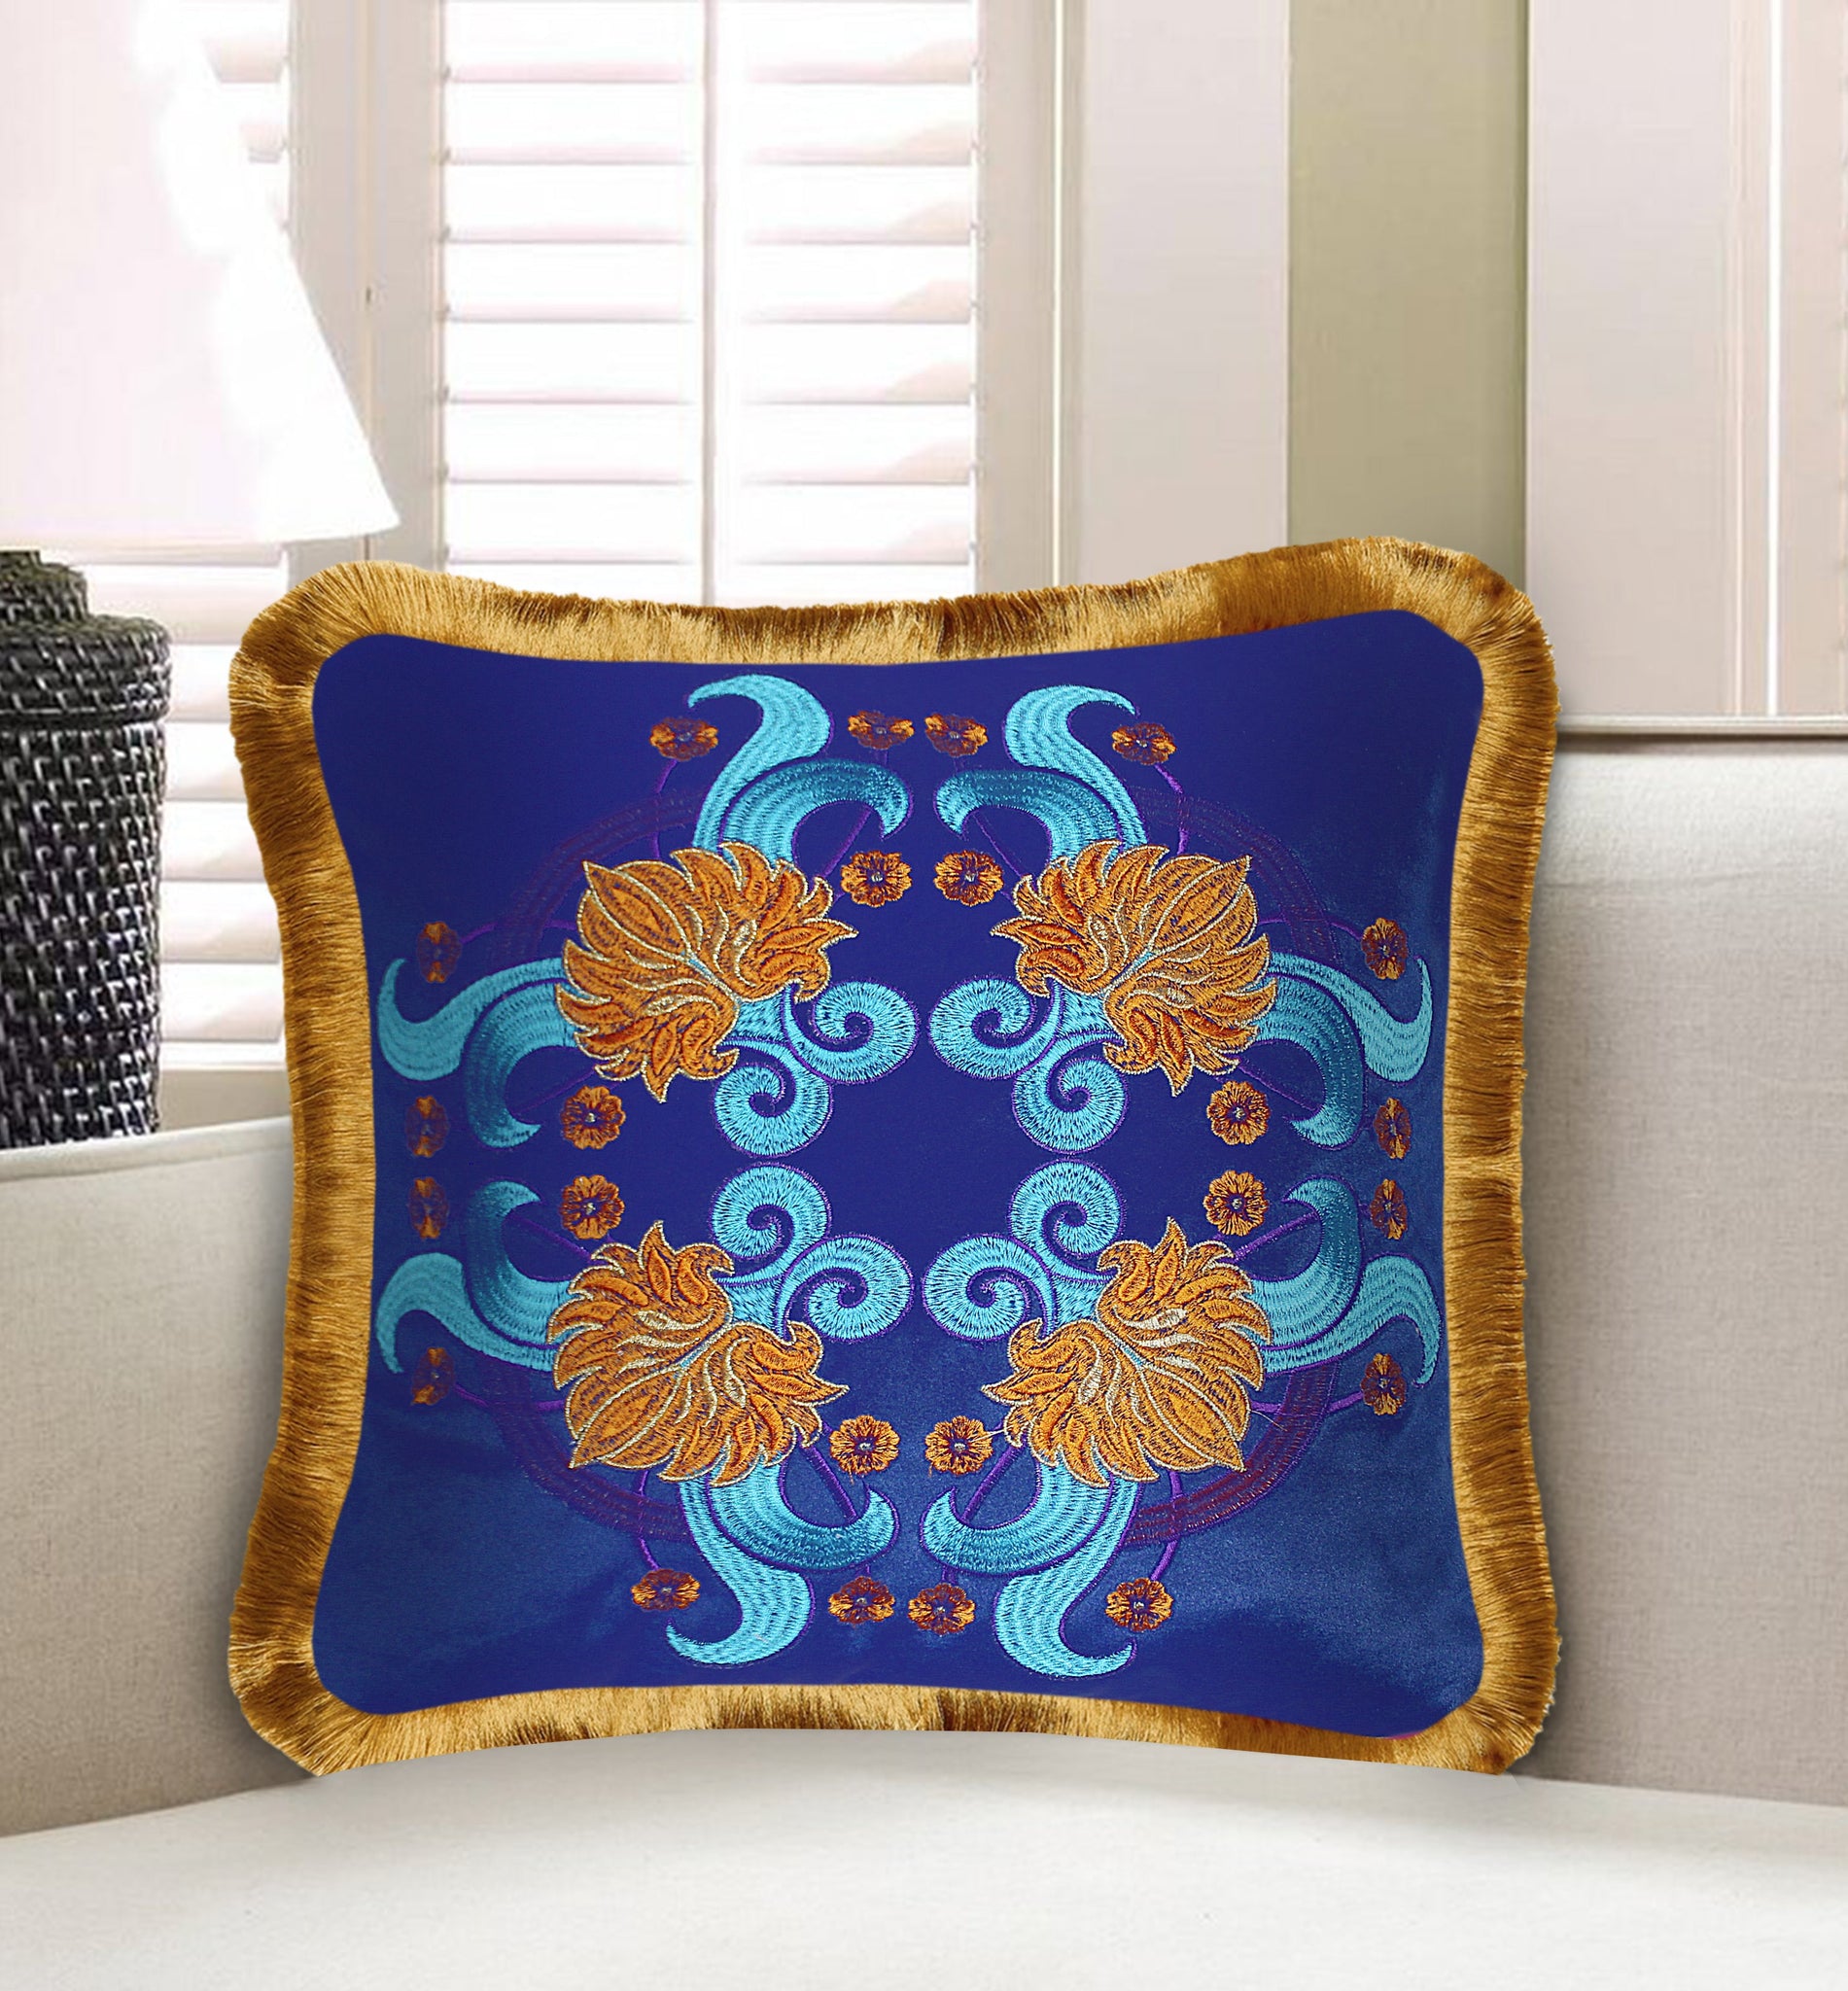 Blue Luxury Embroidered Cushion Covers Velvet Tassels Pillow Case Home Decorative European Sofa Car Throw Pillows Blue Gold